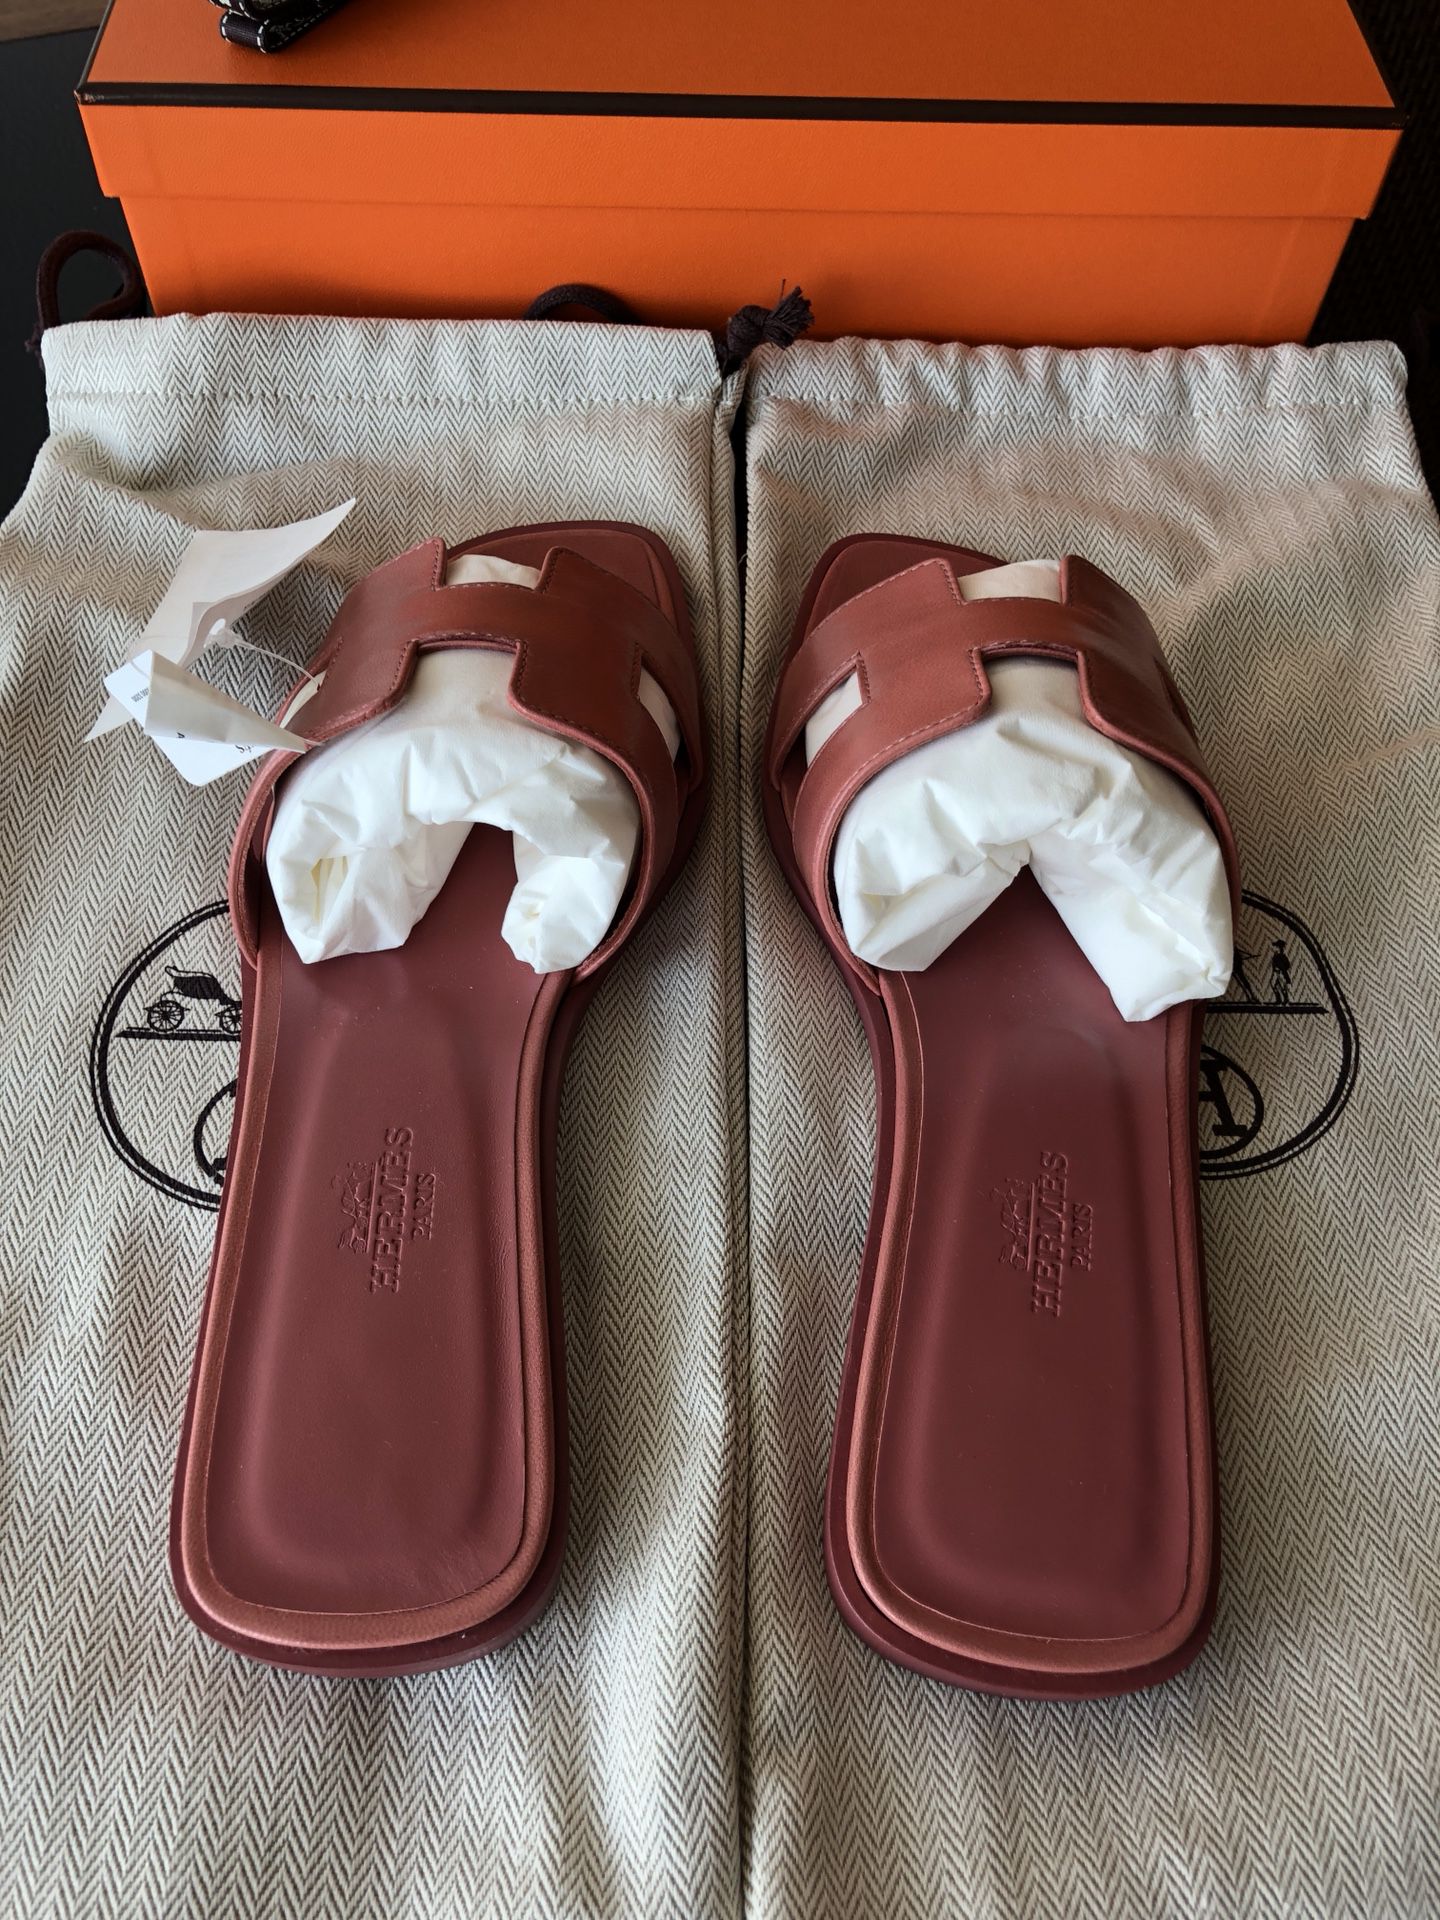 Hermès Oran Sandals - Rouge Blush, Size 37/6 (US) for Sale in US - OfferUp